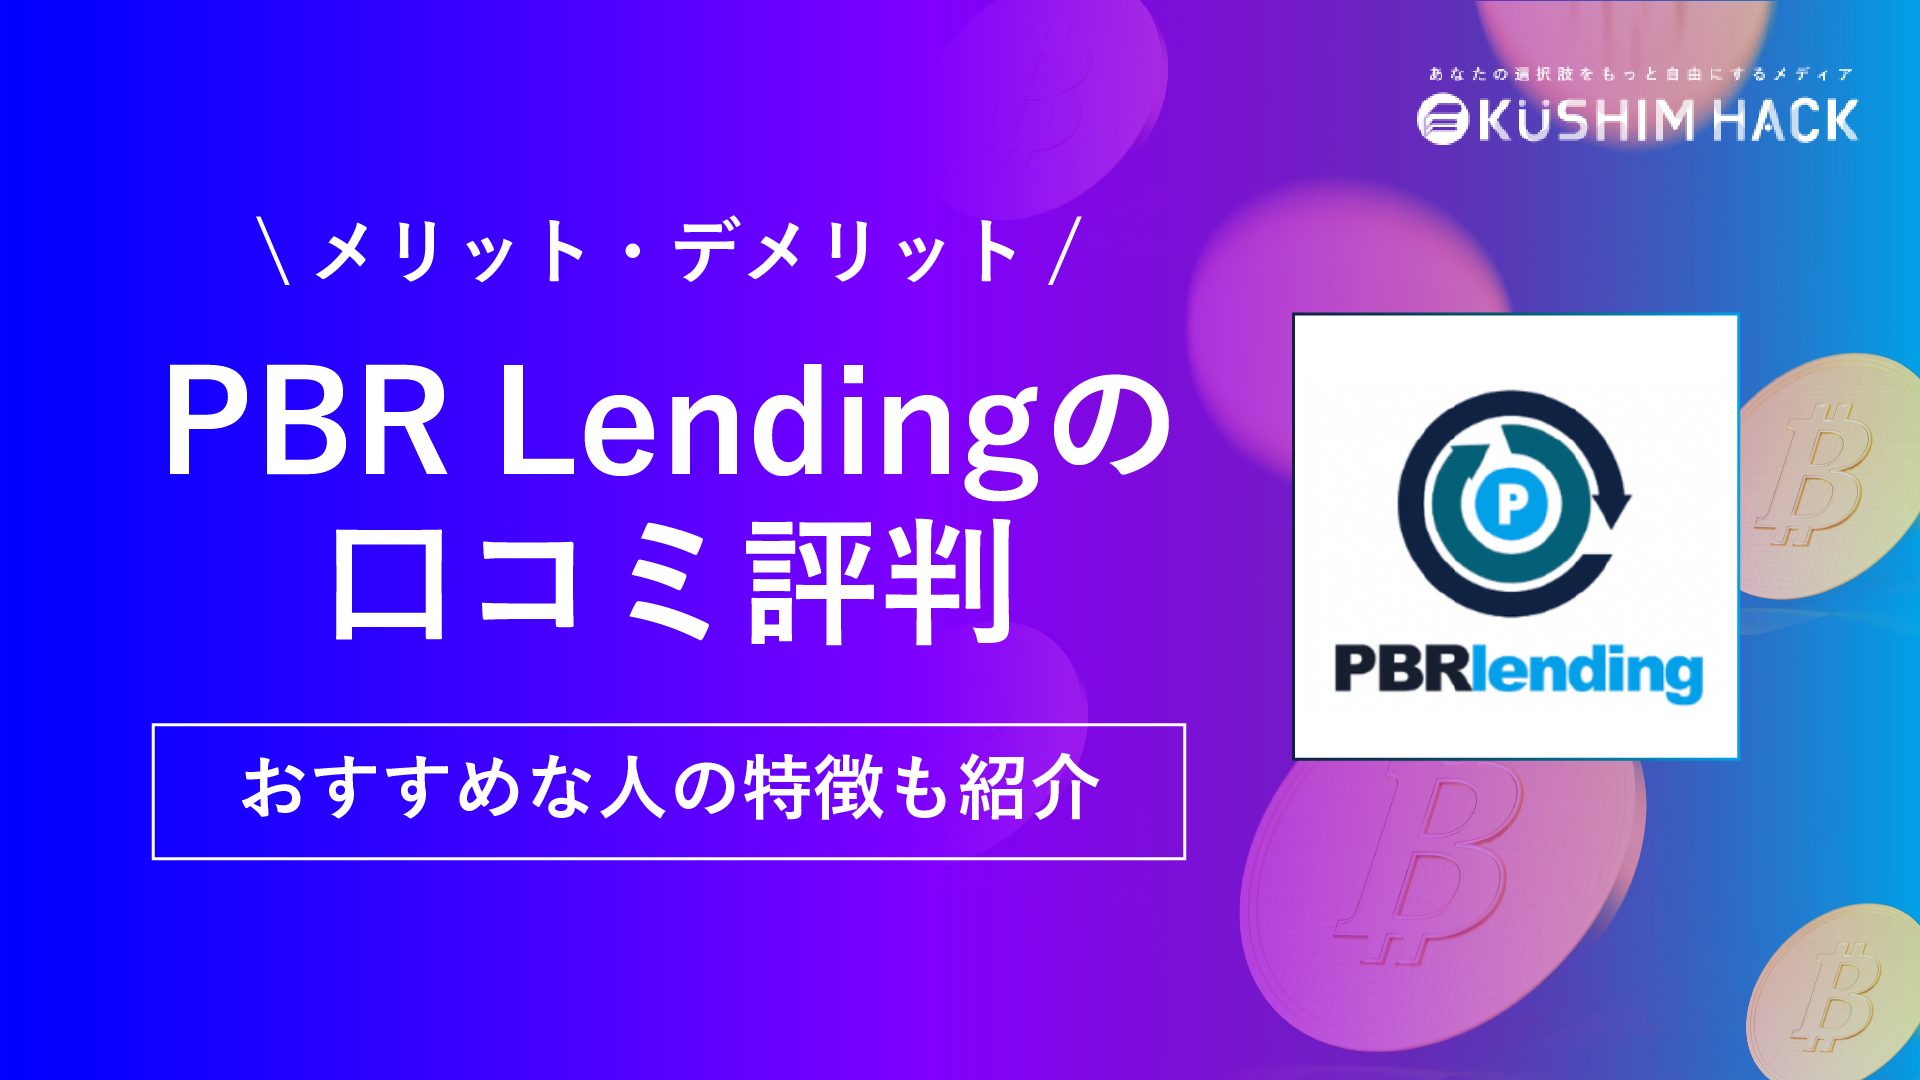 PBR Lendingとは？特徴や仕組み、始め方や2つのプランなど徹底解説！